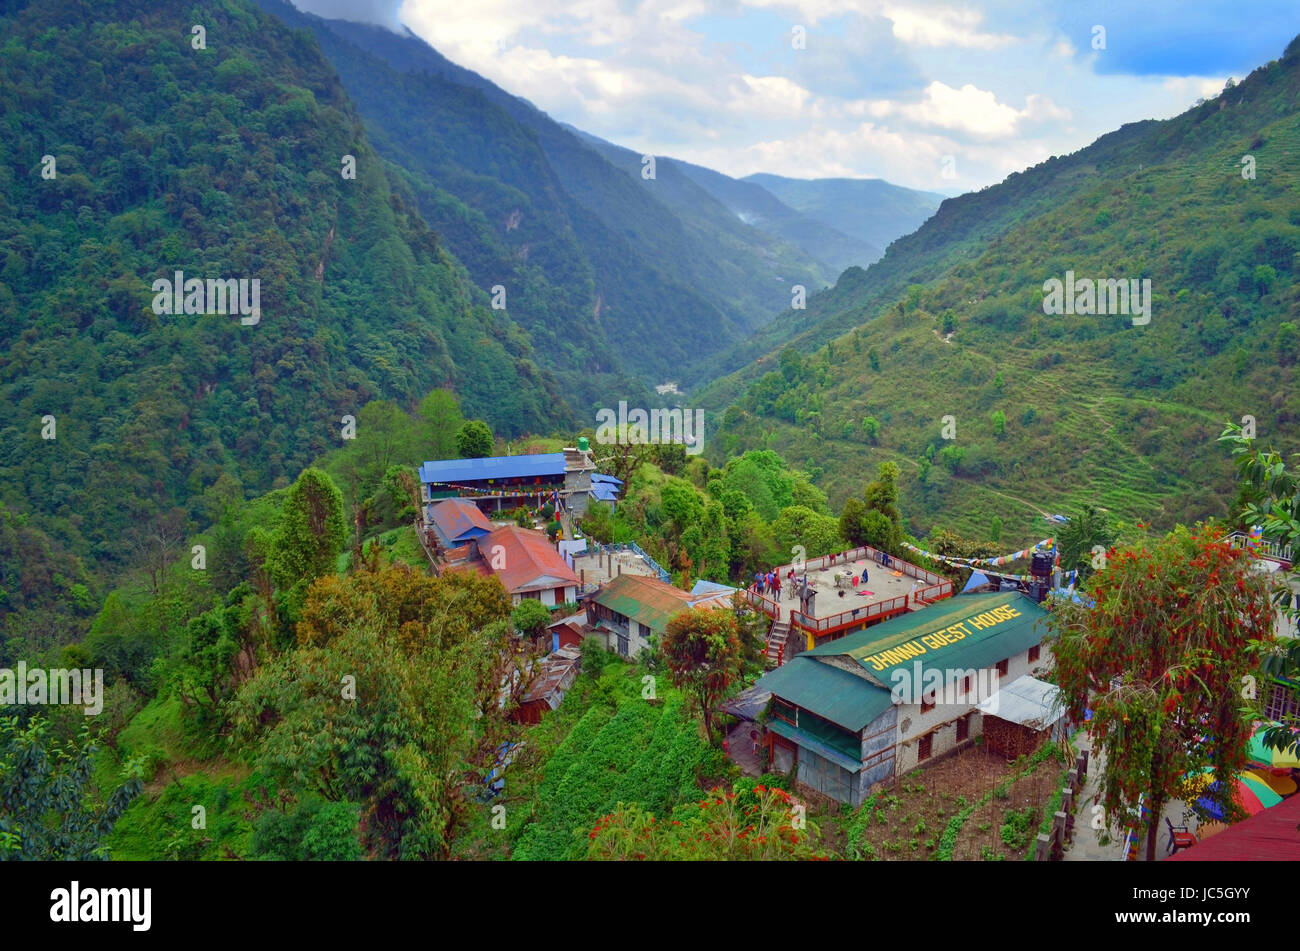 Mountain Village Jhinnu Danda on the Annapurna Base Camp Trek in the Himalayas Stock Photo